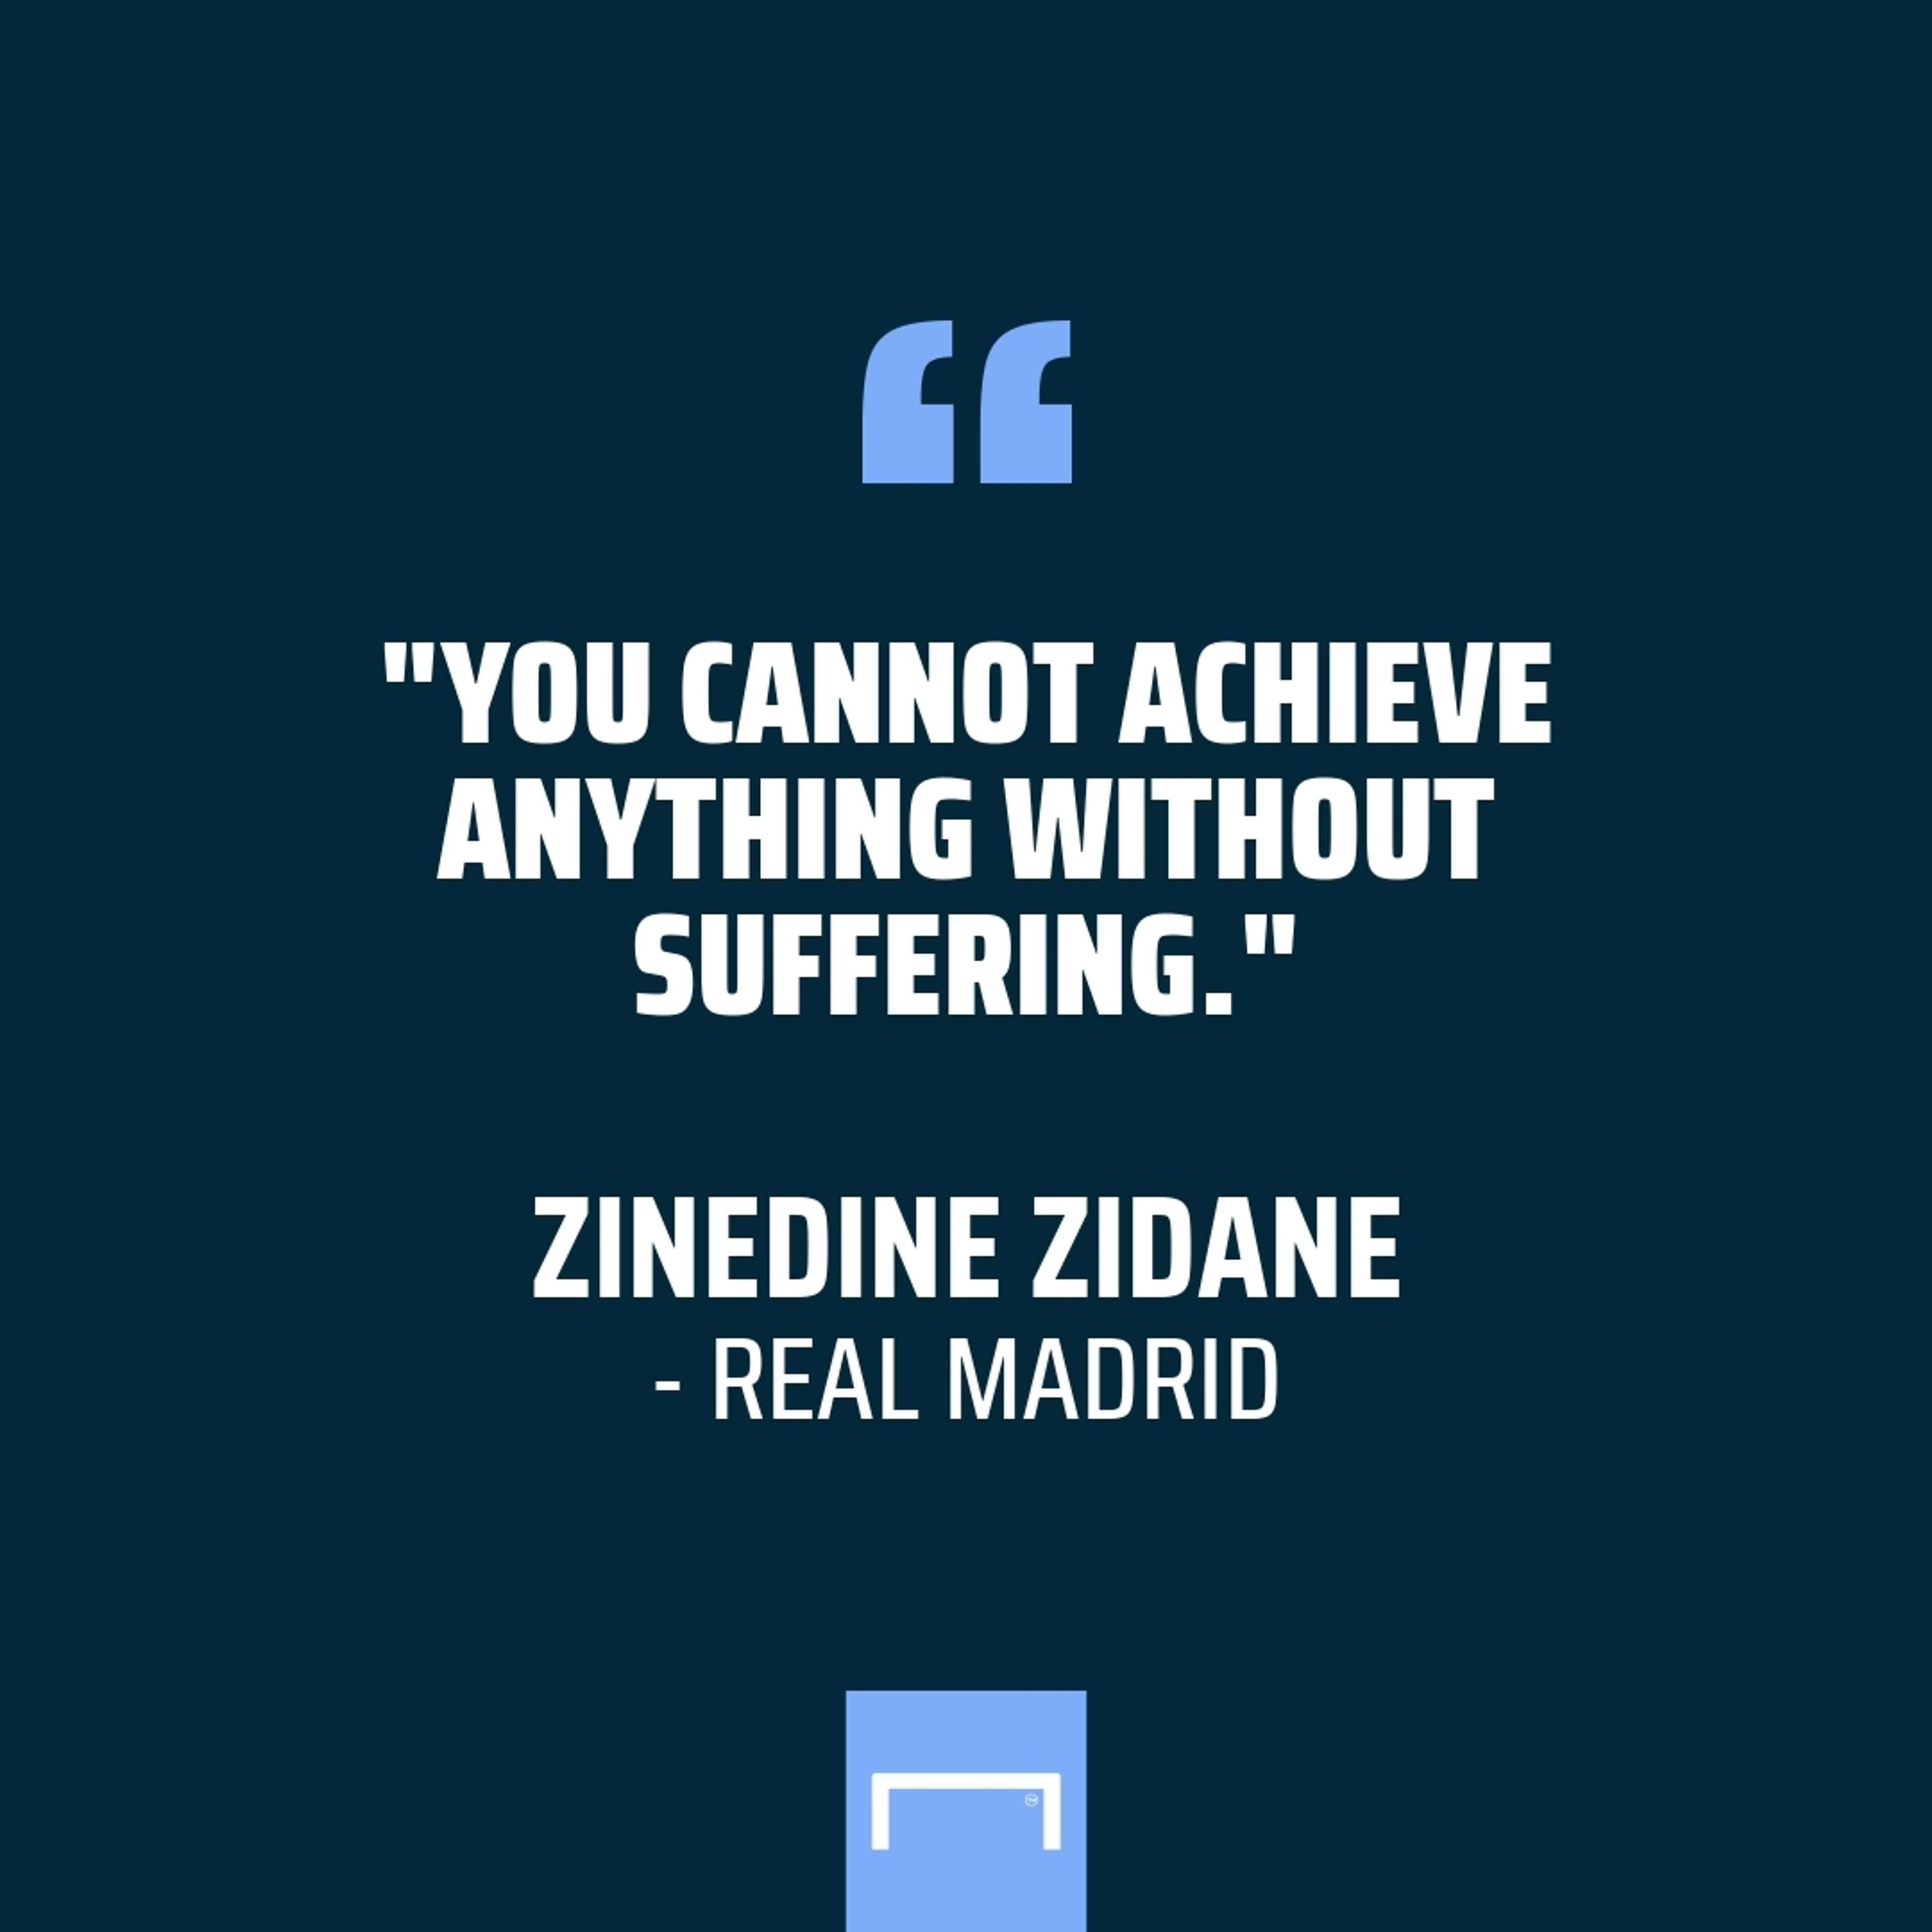 Zinedine Zidane Real Madrid 2019-20 GFX